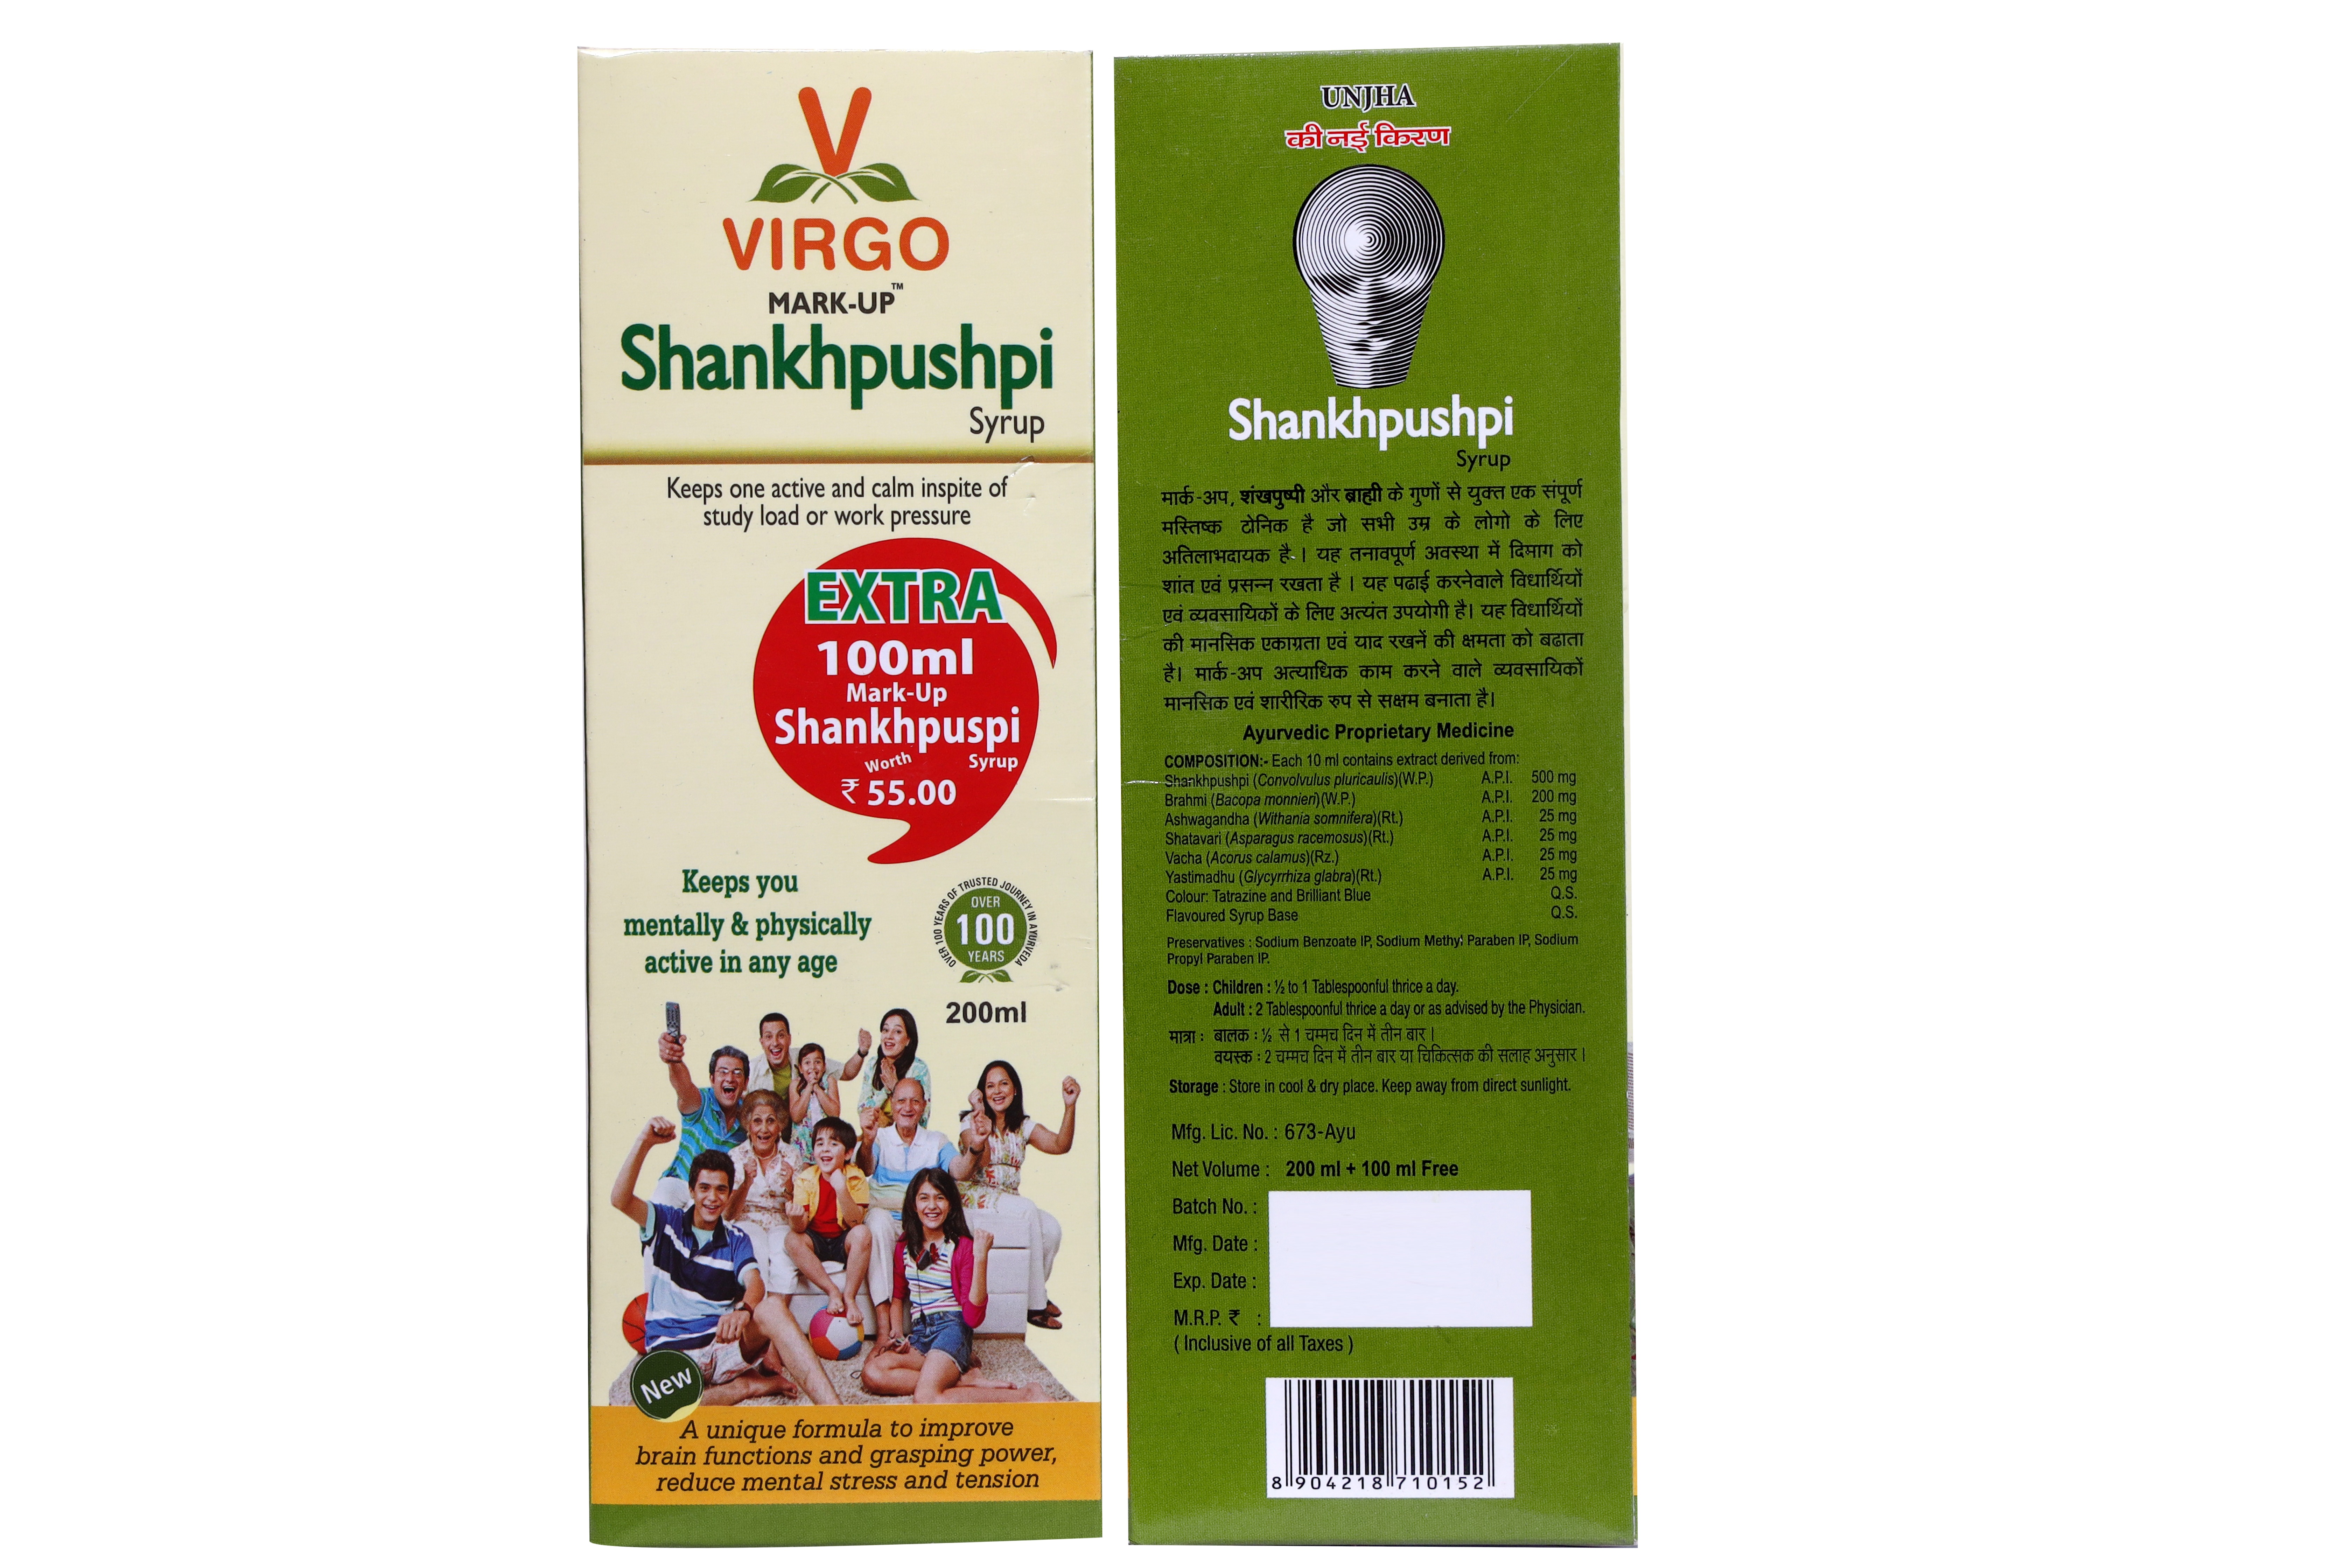 Buy Virgo Mark-up Shankhpushpi Syrup at Best Price Online